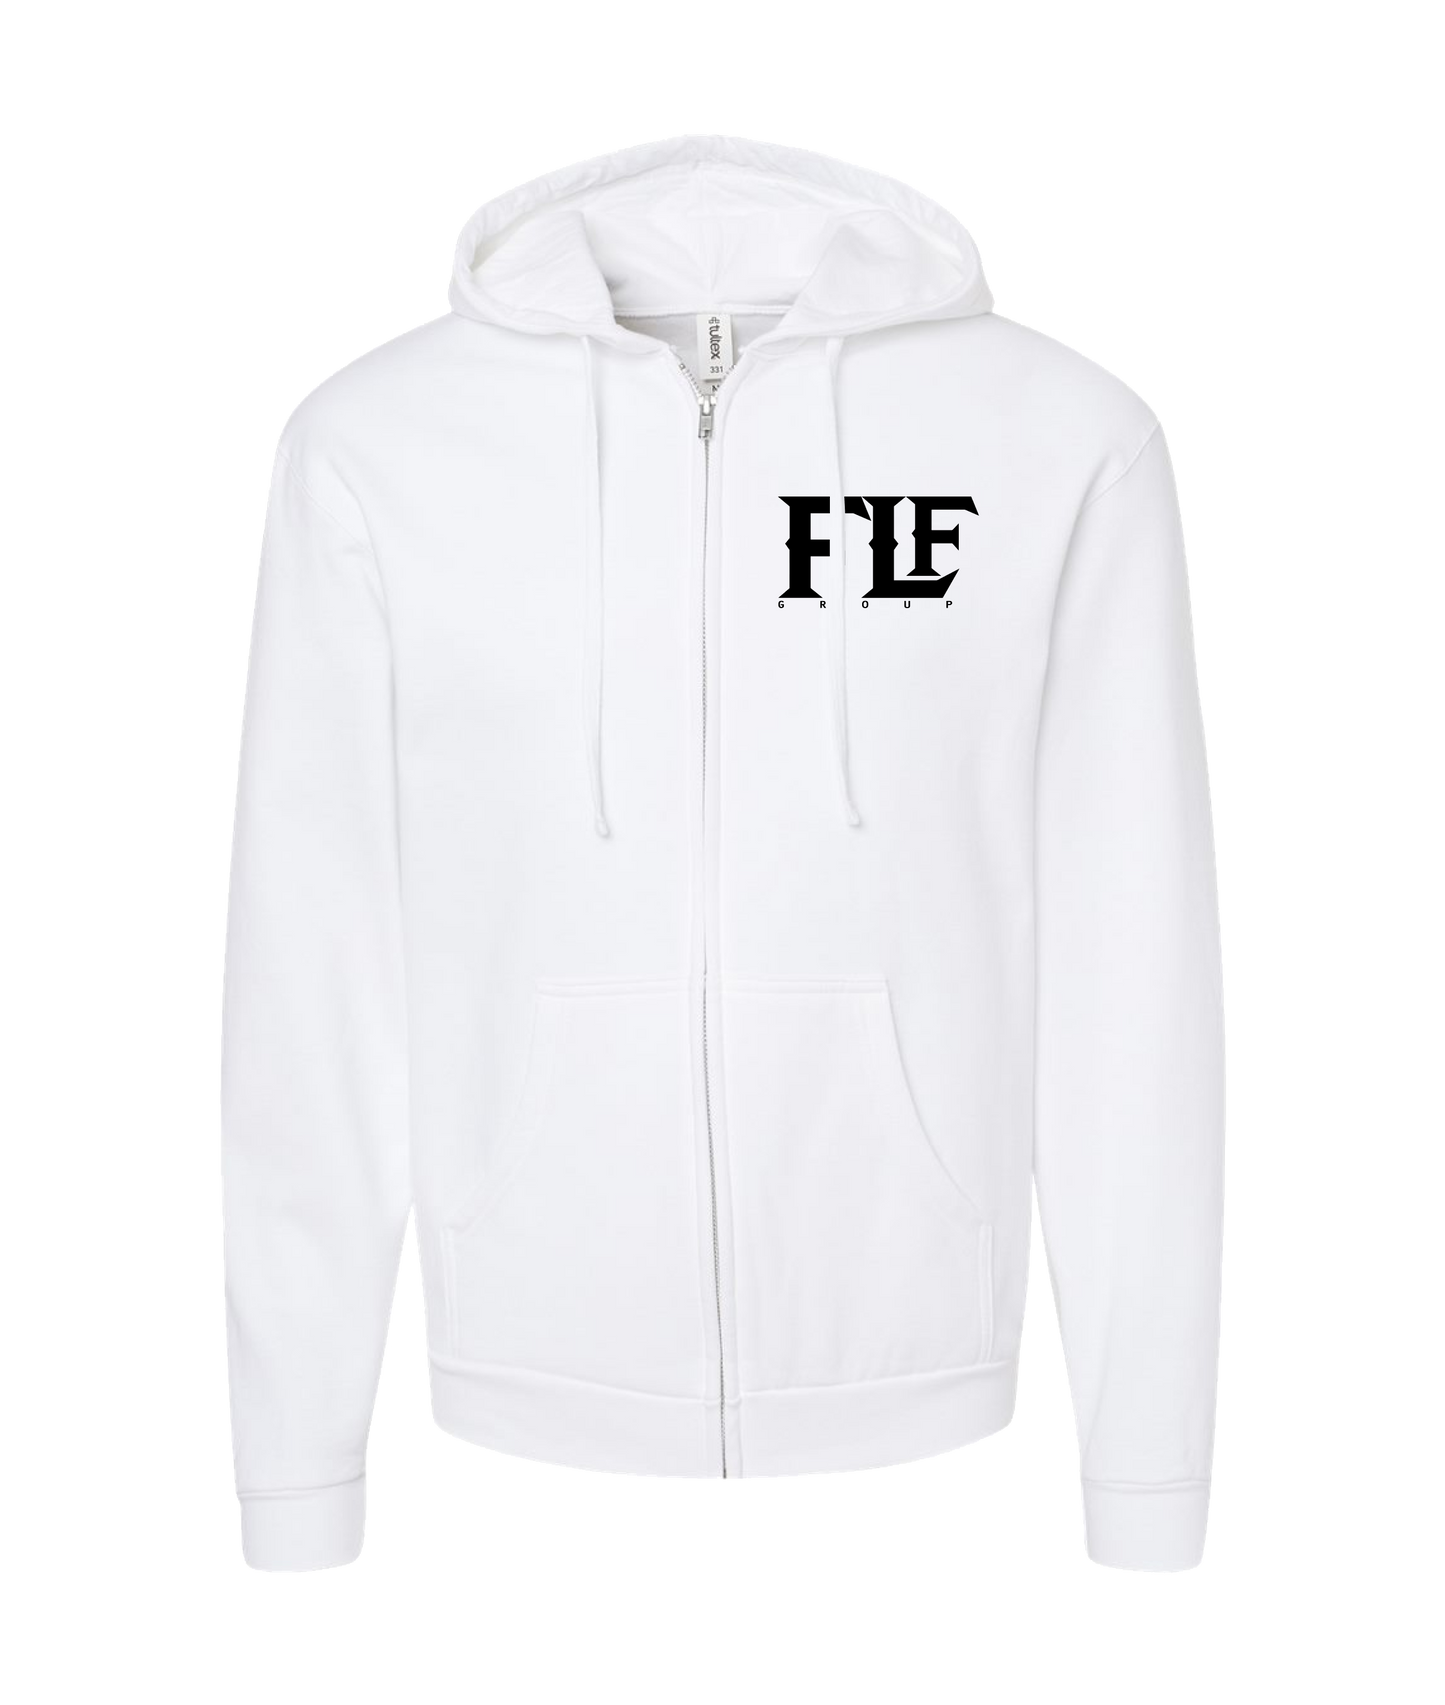 Armani_OD - FLF Group Logo - White Zip Up Hoodie